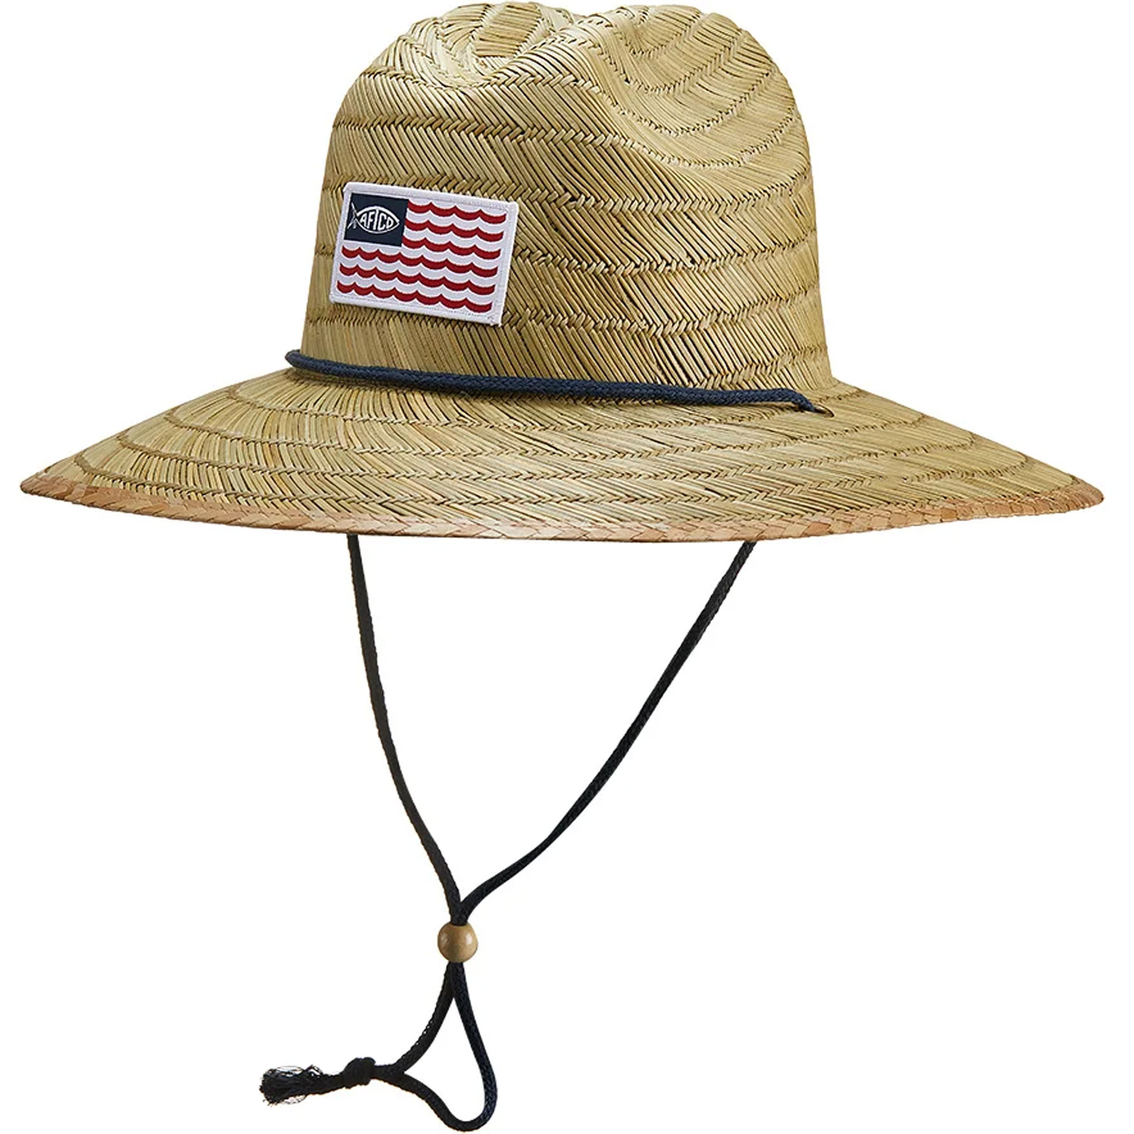 Aftco Palapa Straw Hat, Hats & Visors